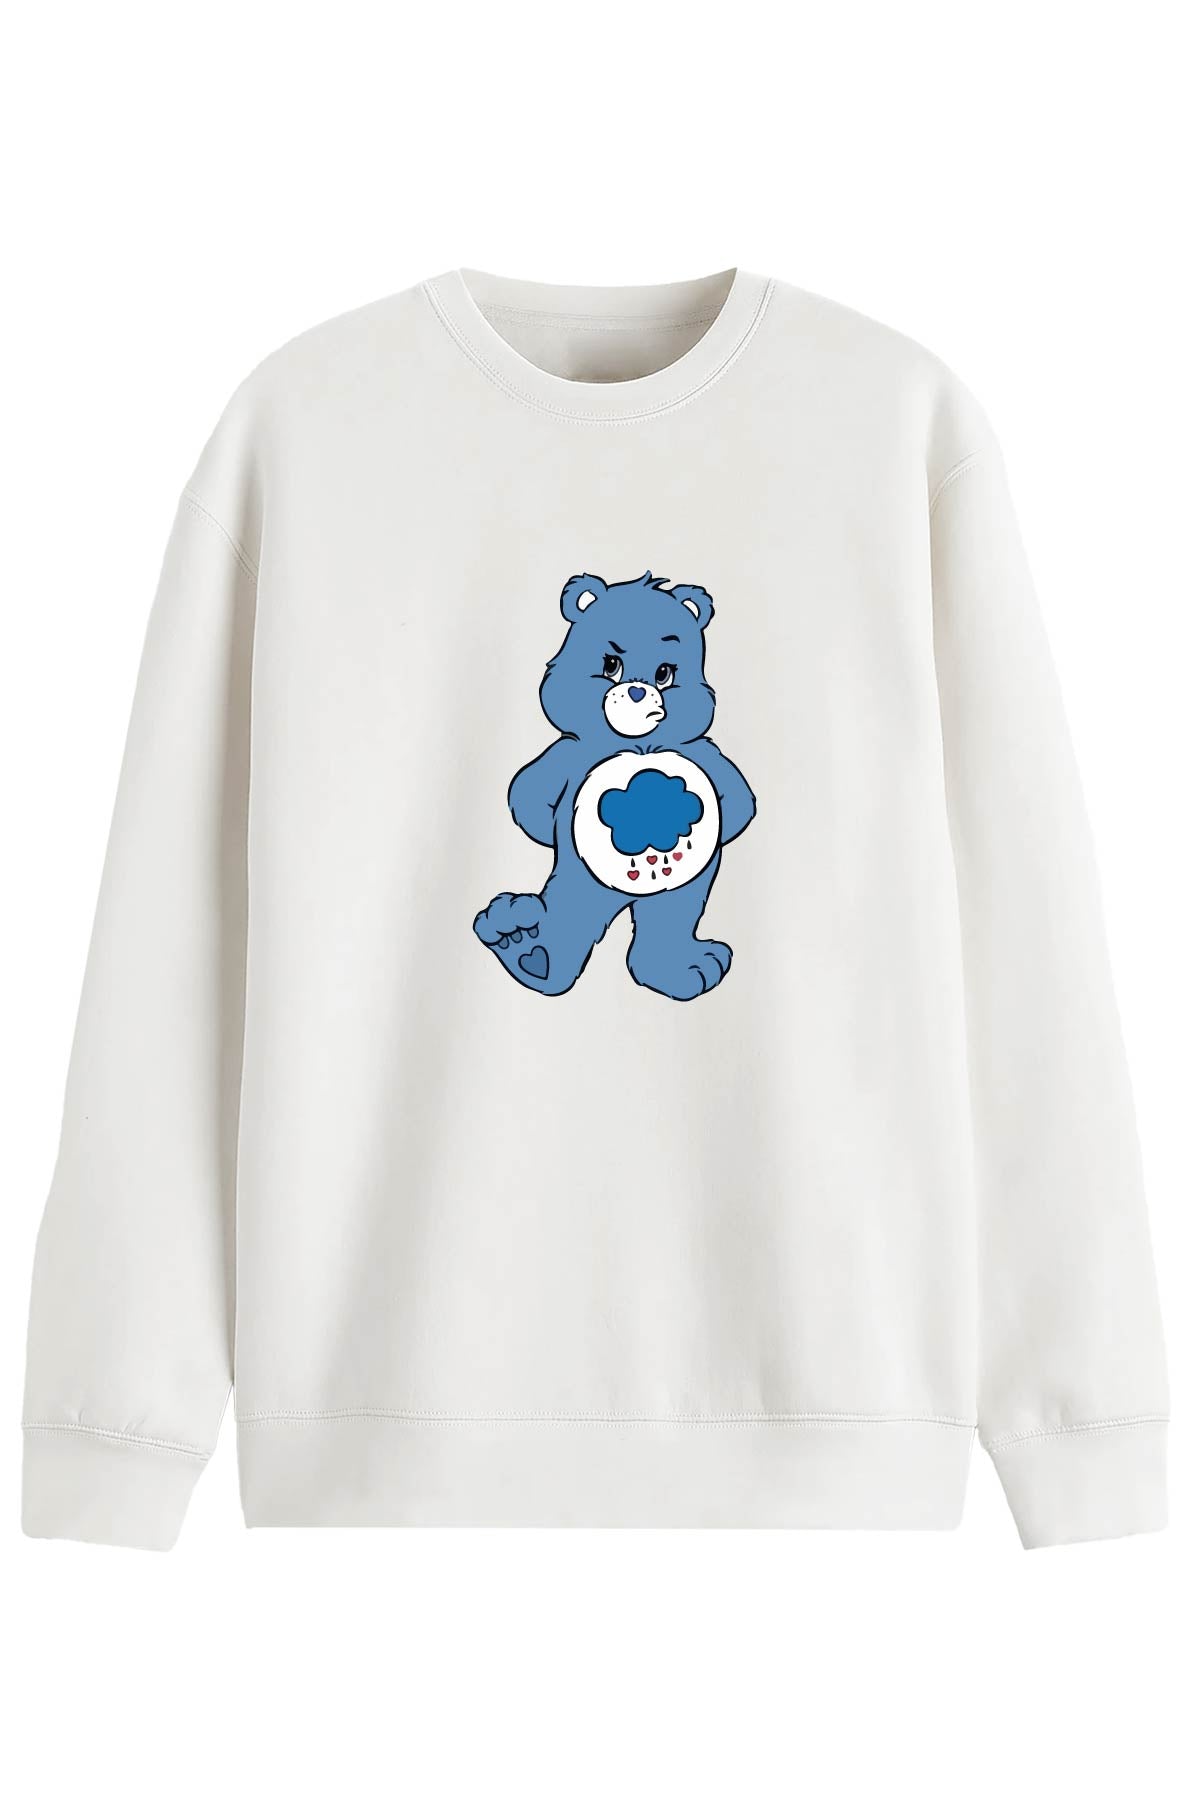 Care Bears / Grumpy Sweatshirt